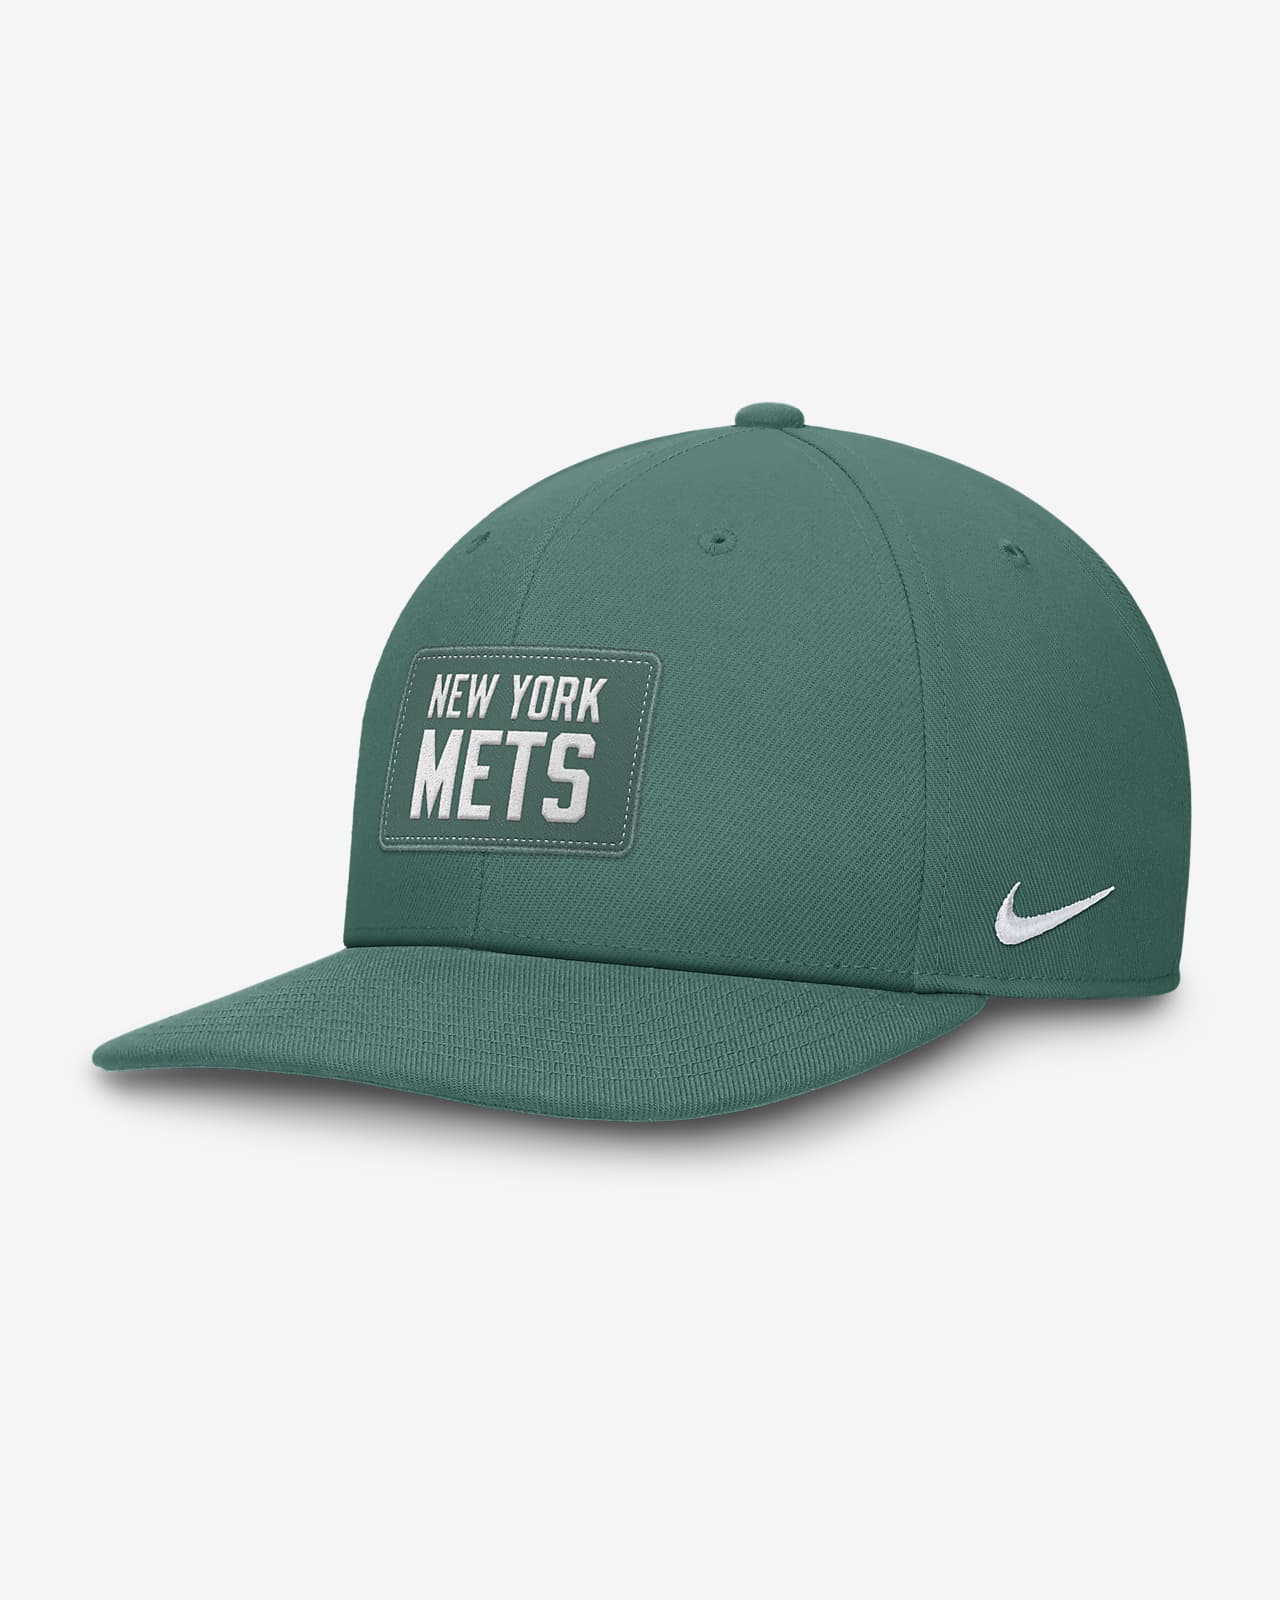 New York Mets Bicoastal Pro Men's Nike Dri-FIT MLB Adjustable Hat